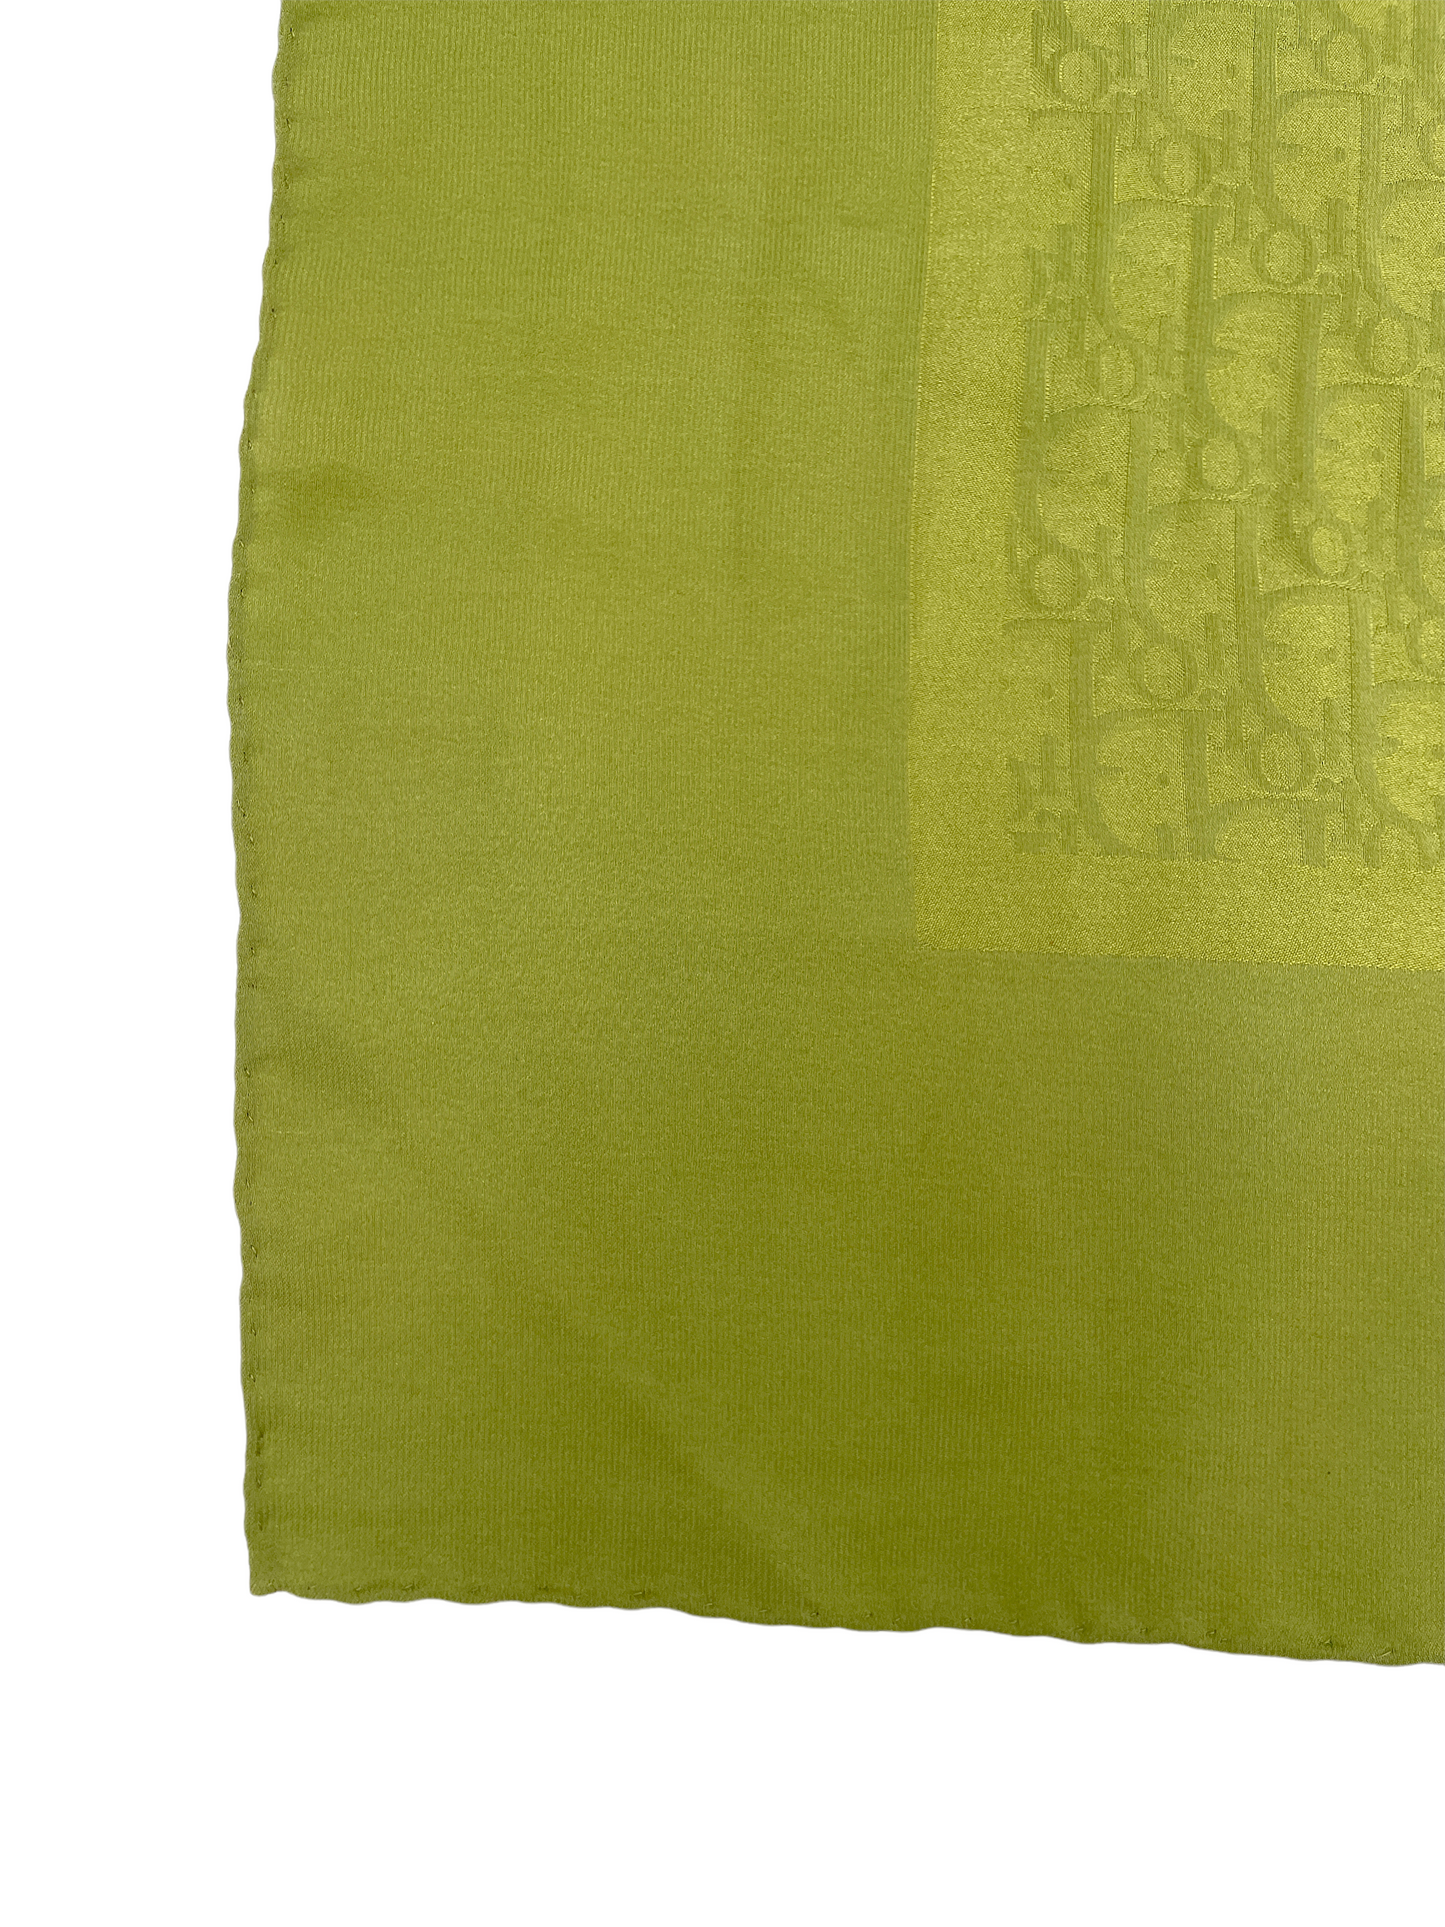 Christian Dior Apple Green Monoram Silk Scarf